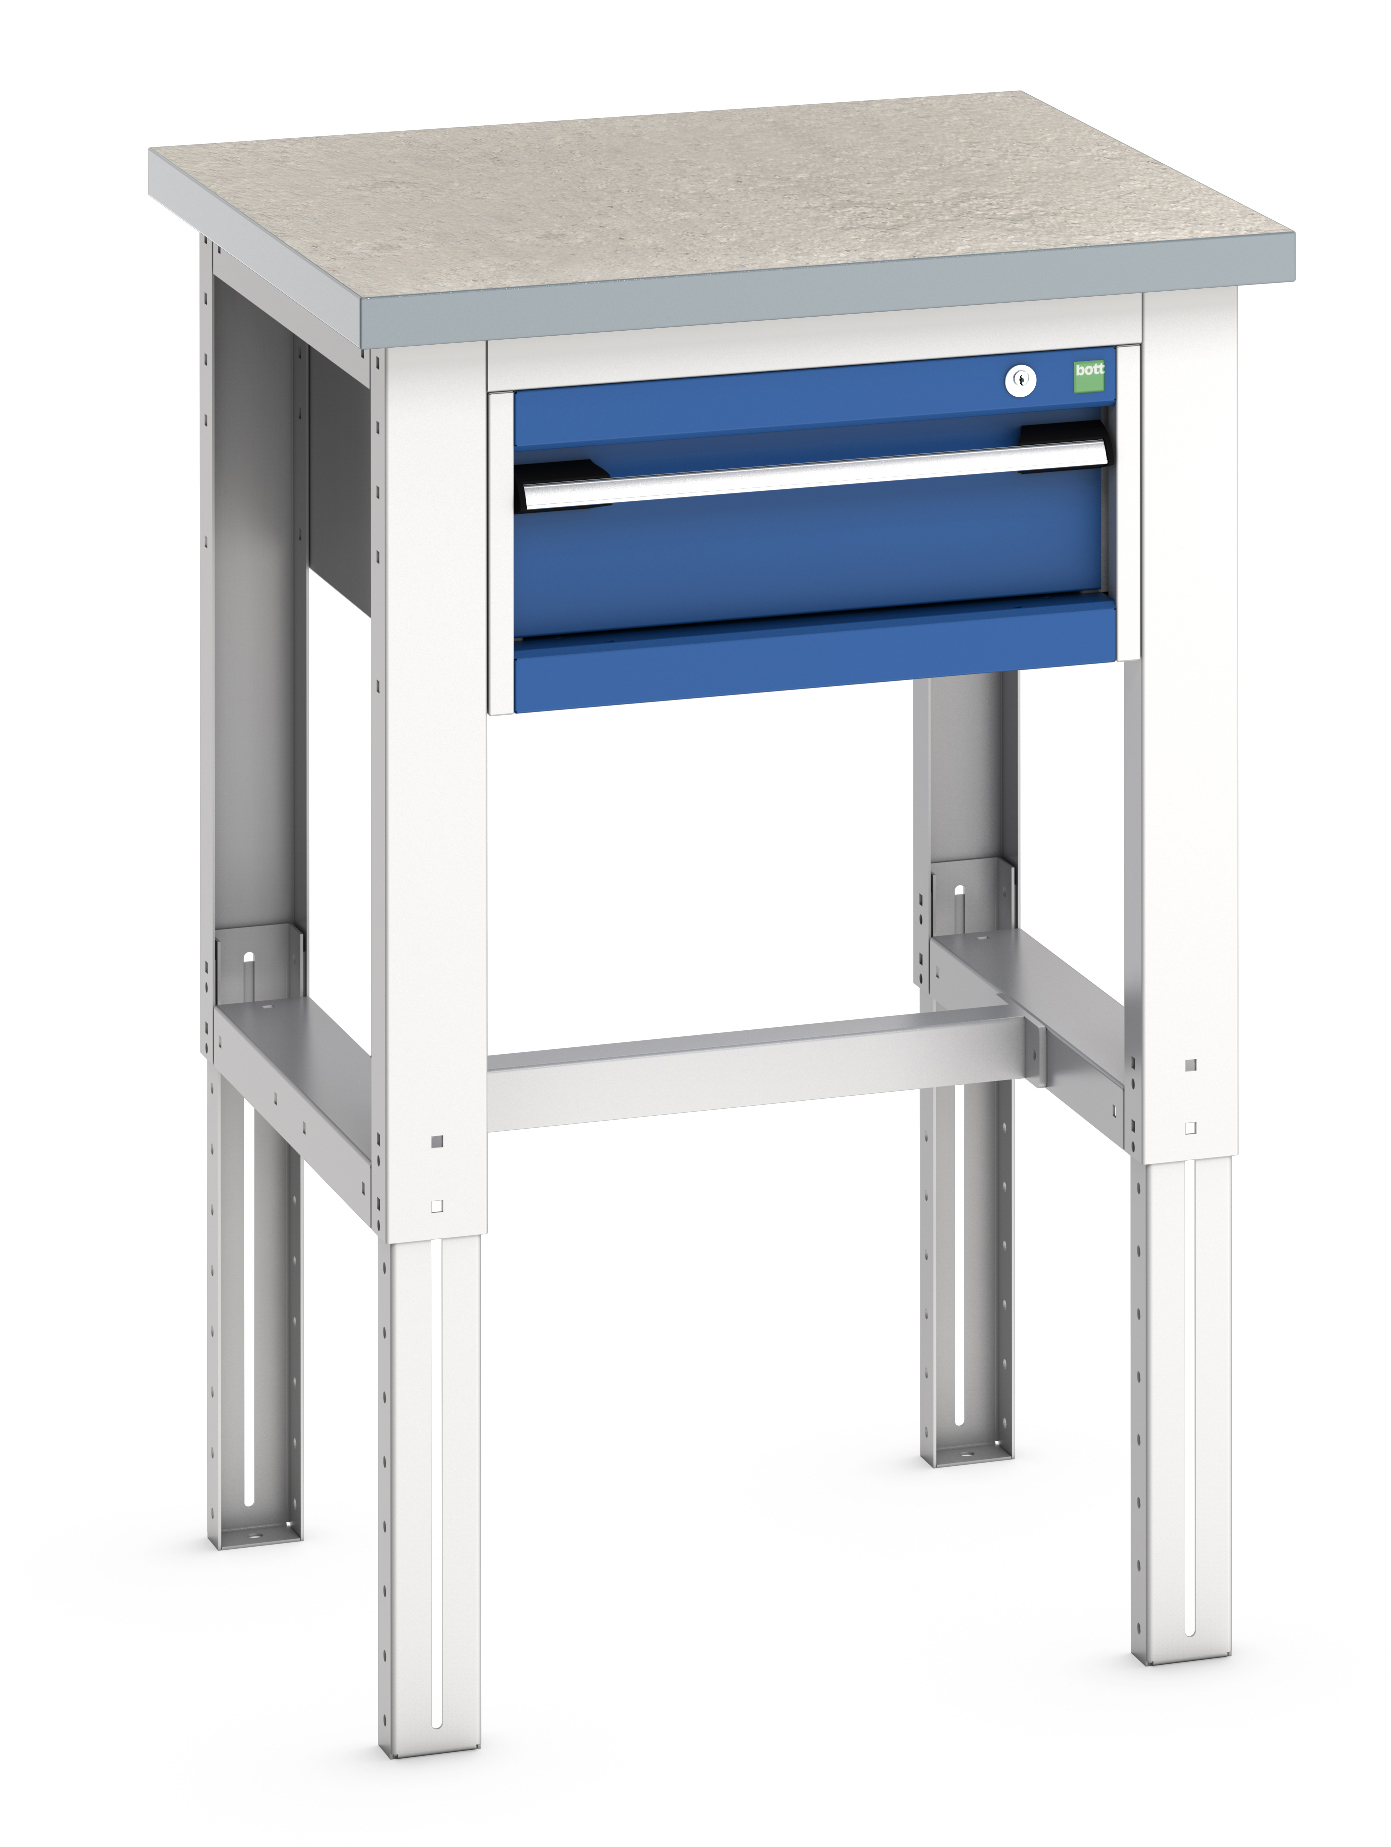 Bott Cubio Adjustable Height Workstand With 1 Drawer Cabinet - 41003532.11V